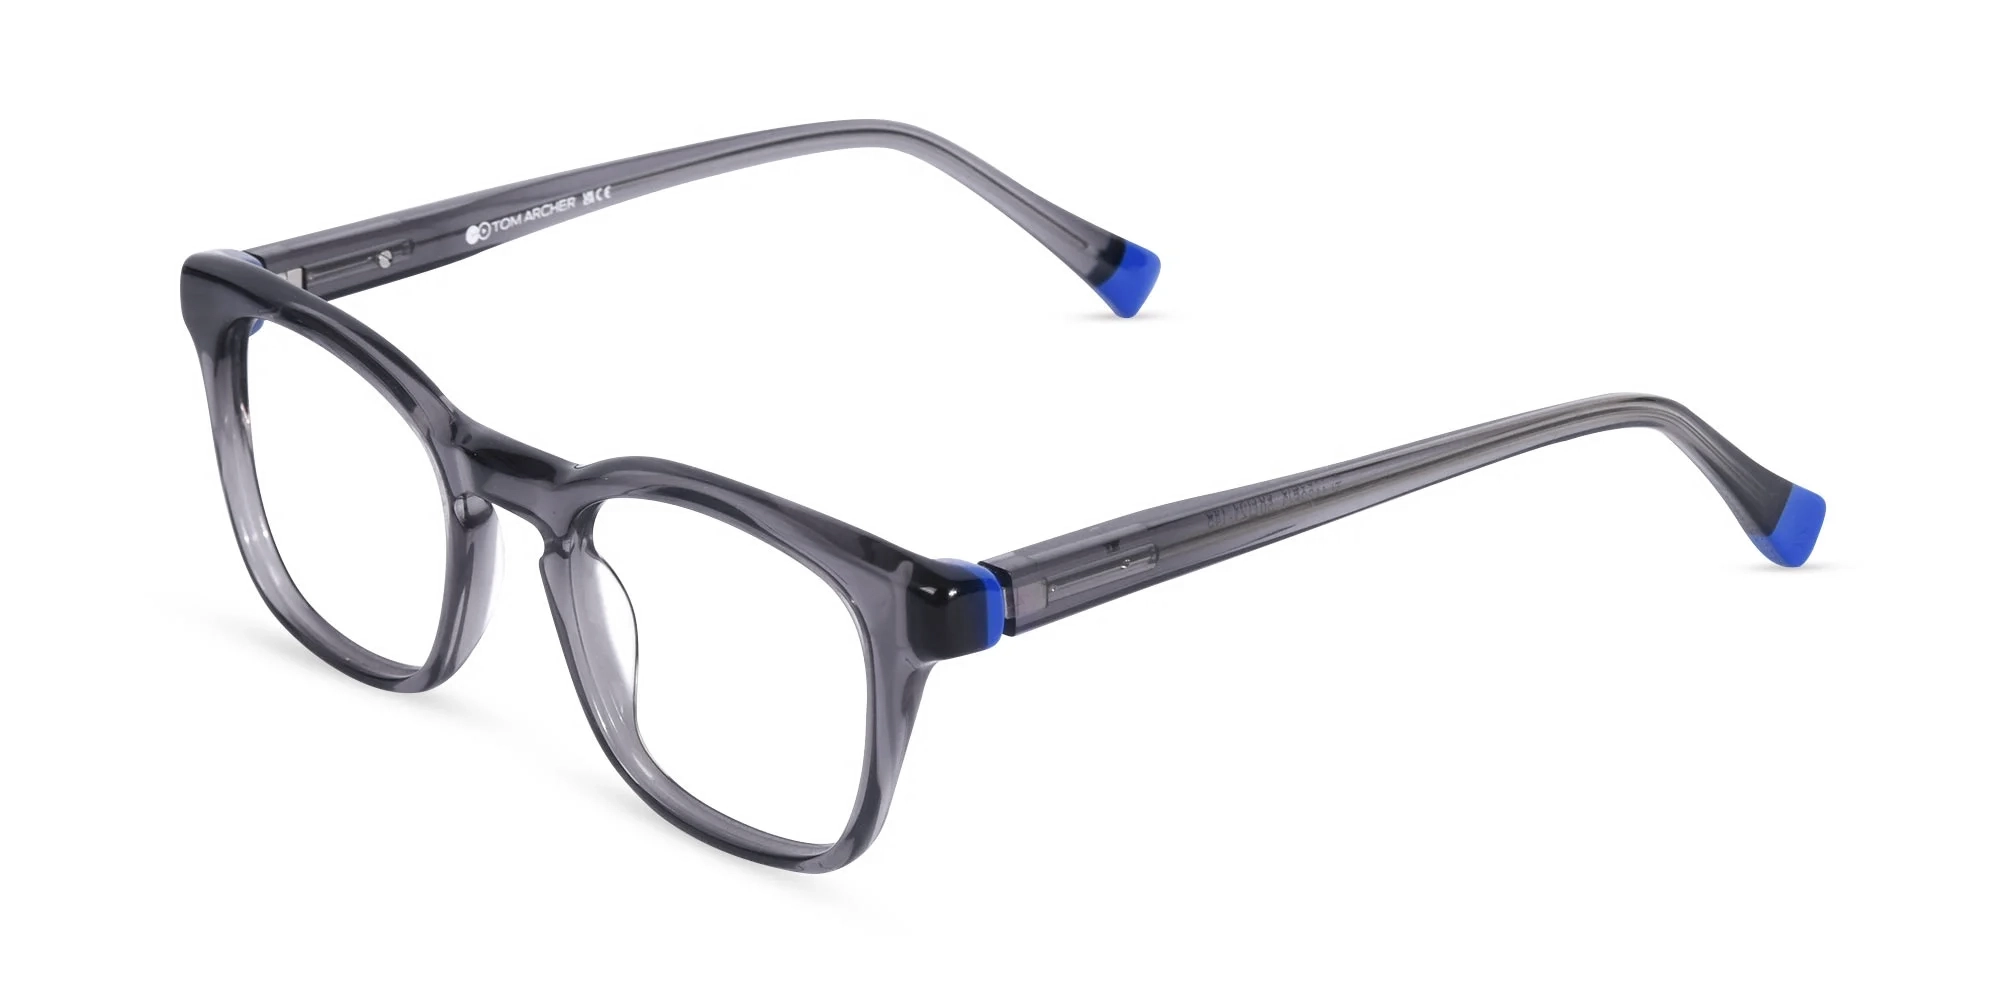 Charcoal Grey Square Glasses-1